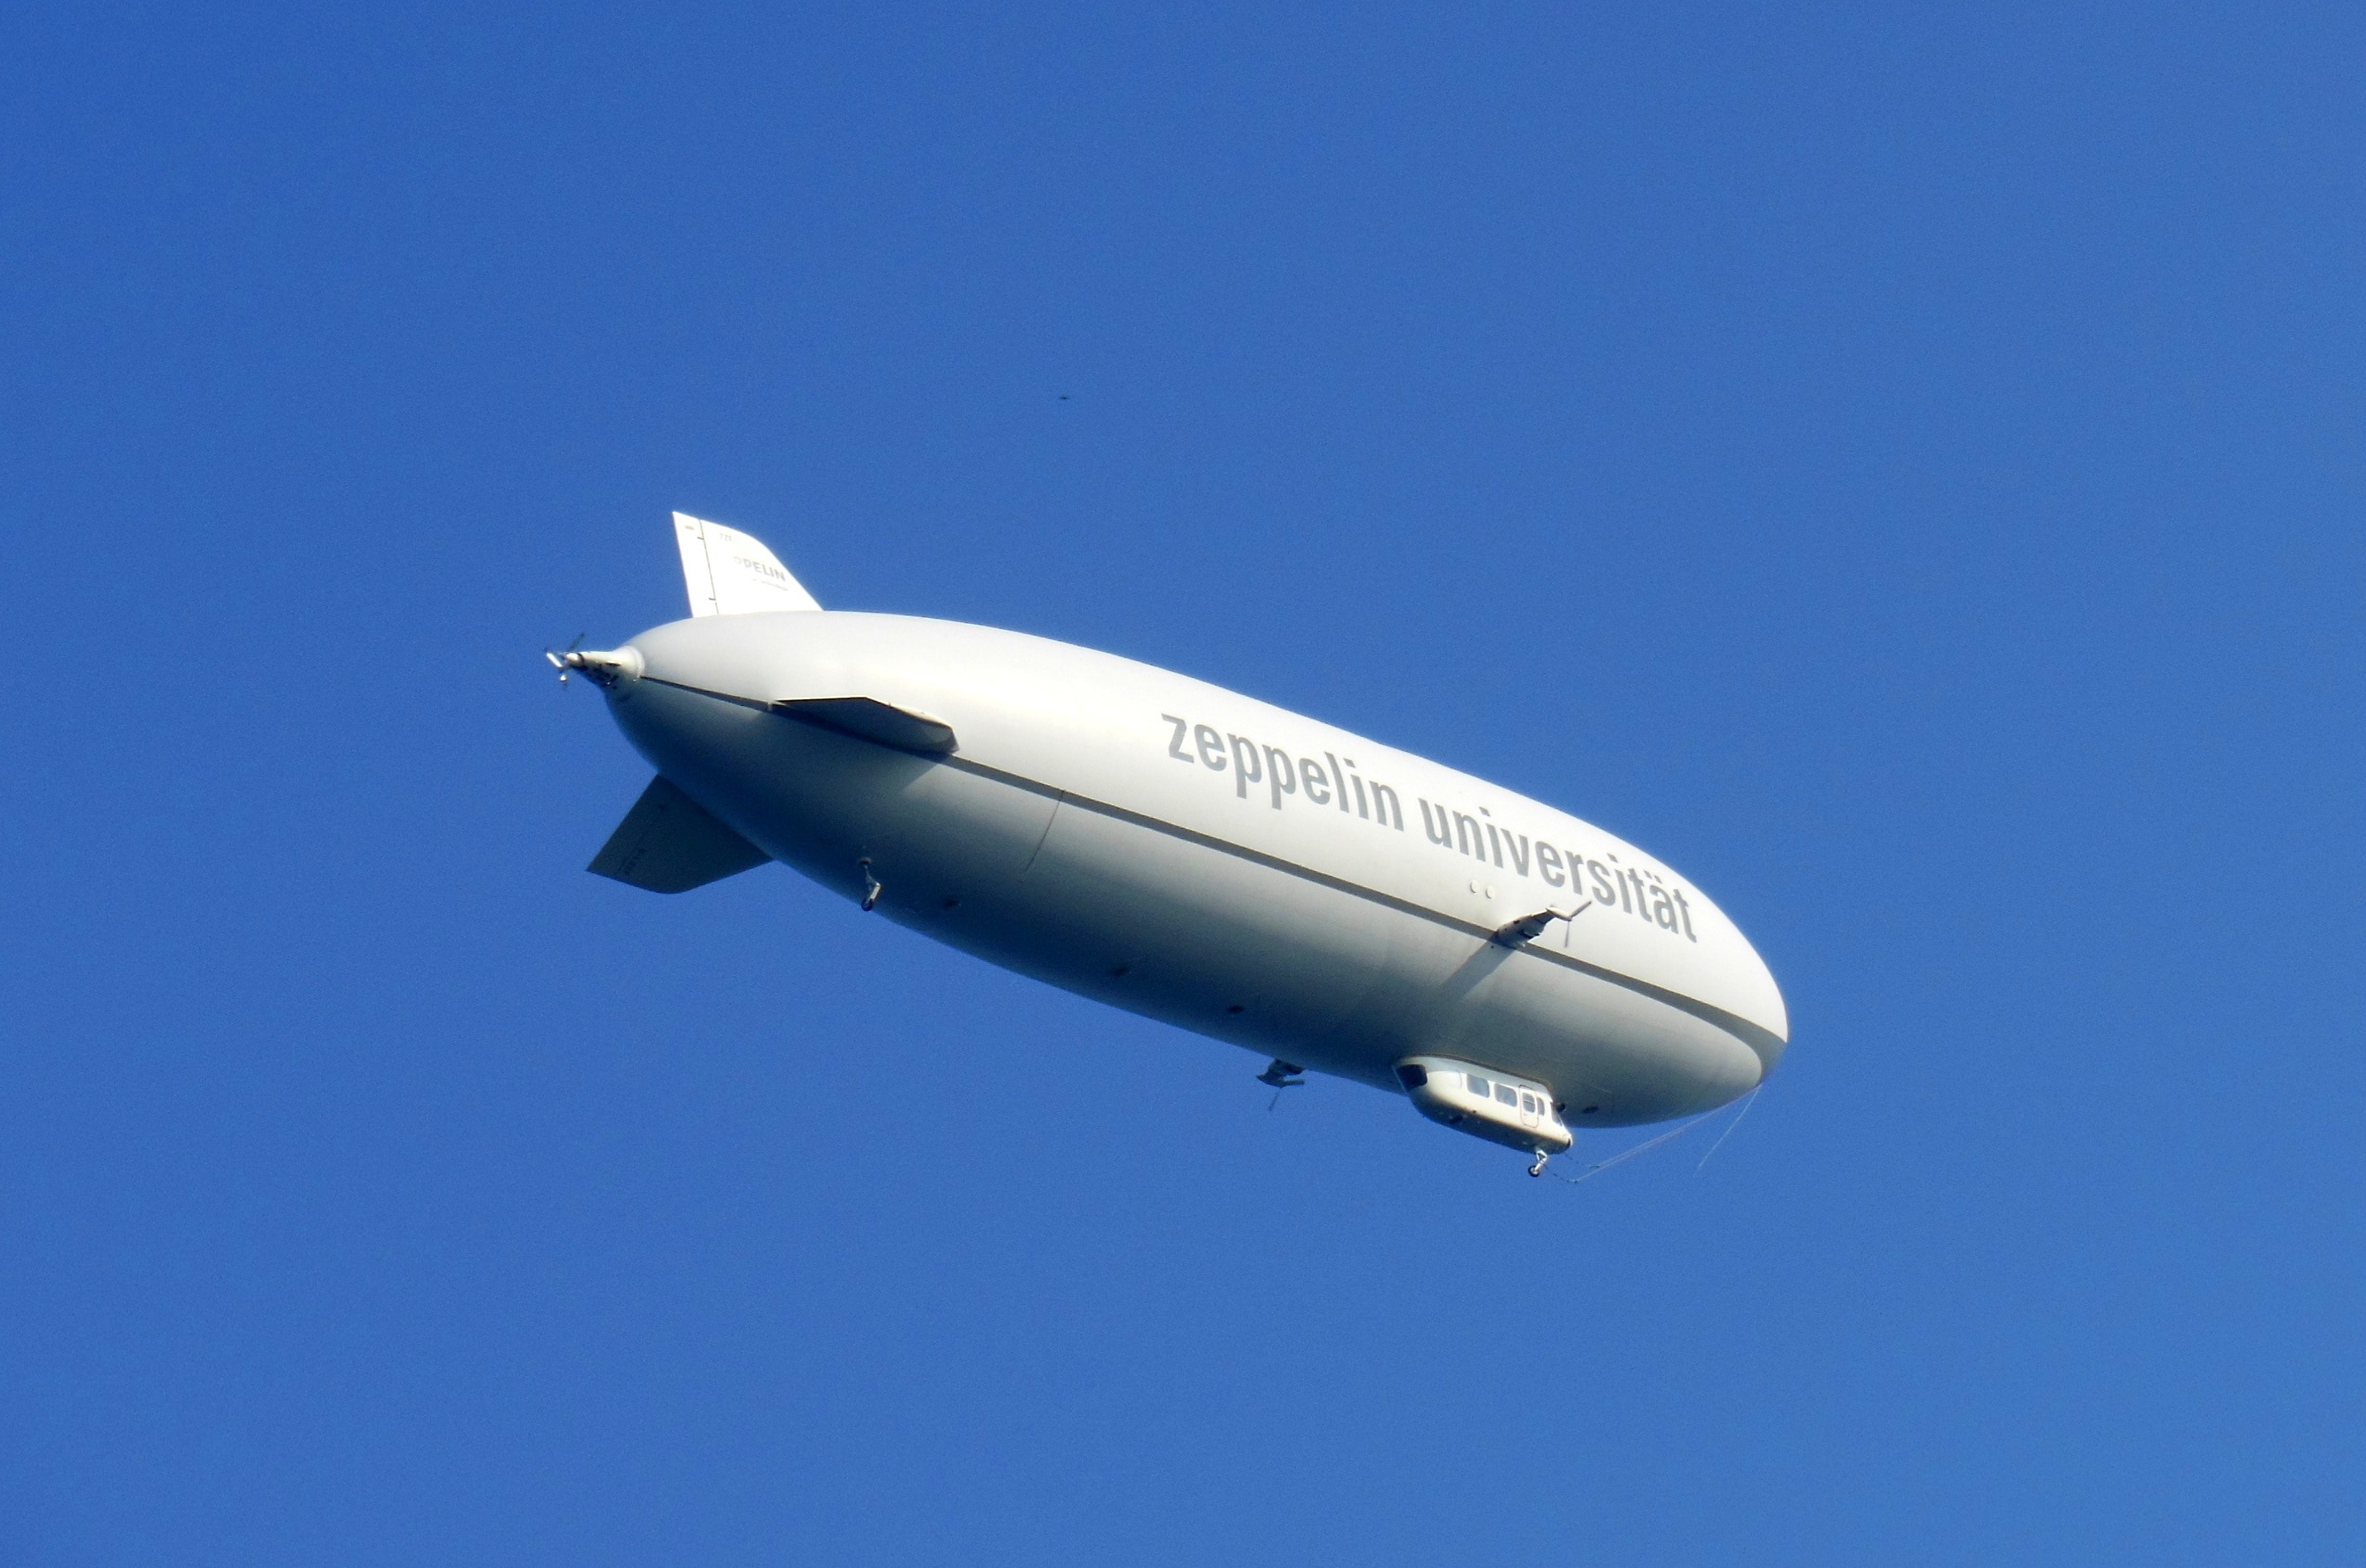 white zeppelin universitat aircraft